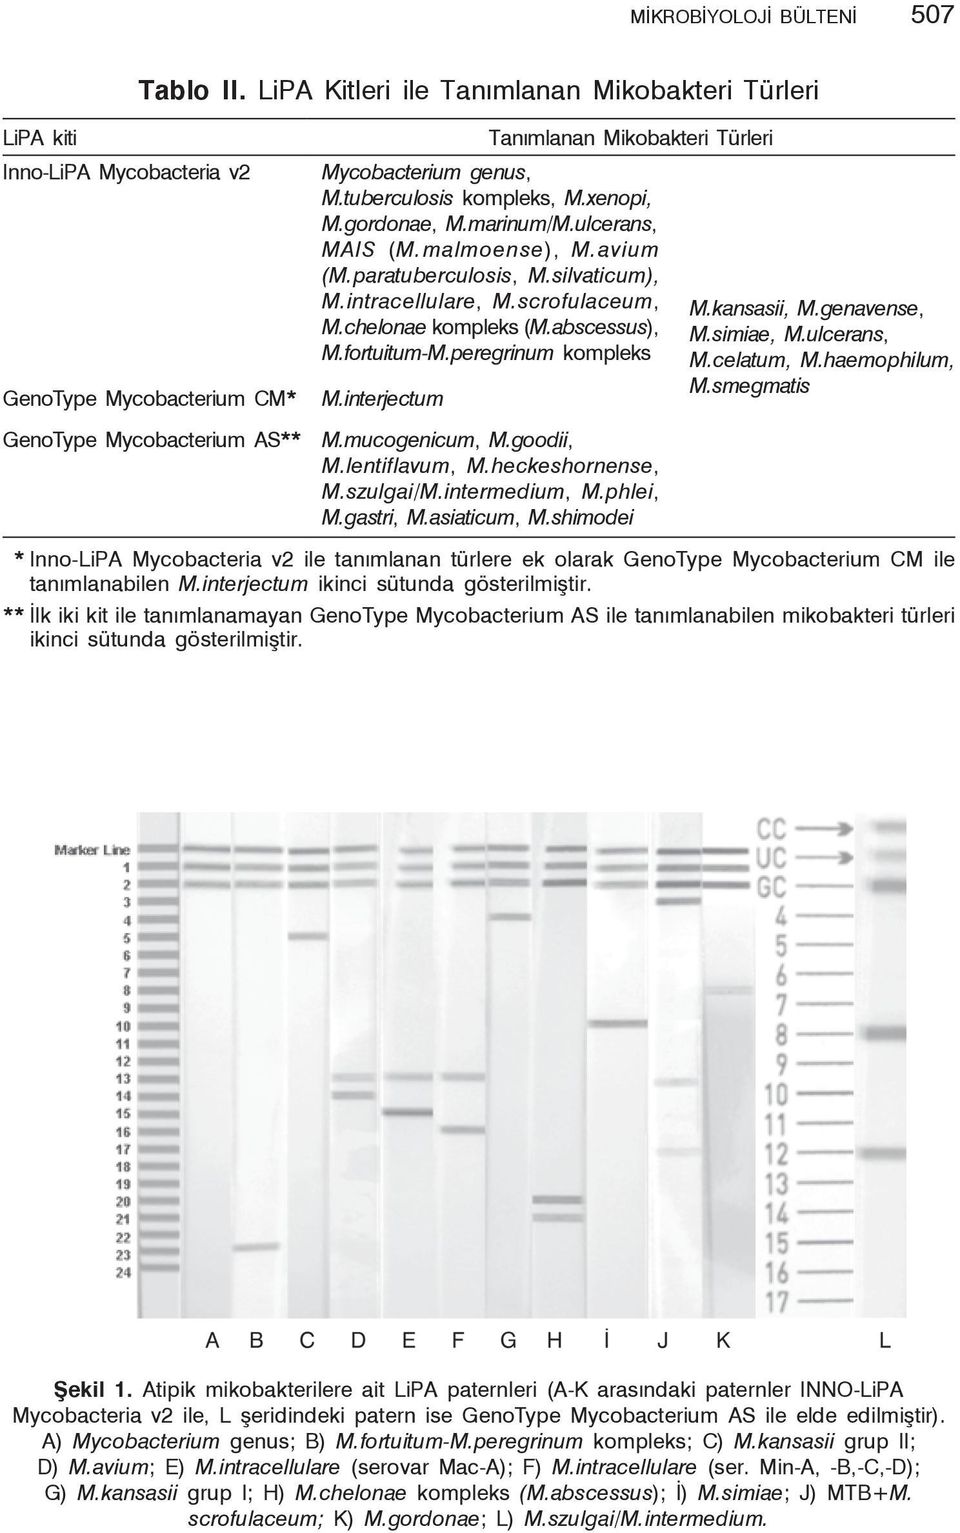 tuberculosis kompleks, M.xenopi, M.gordonae, M.marinum/M.ulcerans, MAIS (M.malmoense), M.avium (M.paratuberculosis, M.silvaticum), M.intracellulare, M.scrofulaceum, M.chelonae kompleks (M.